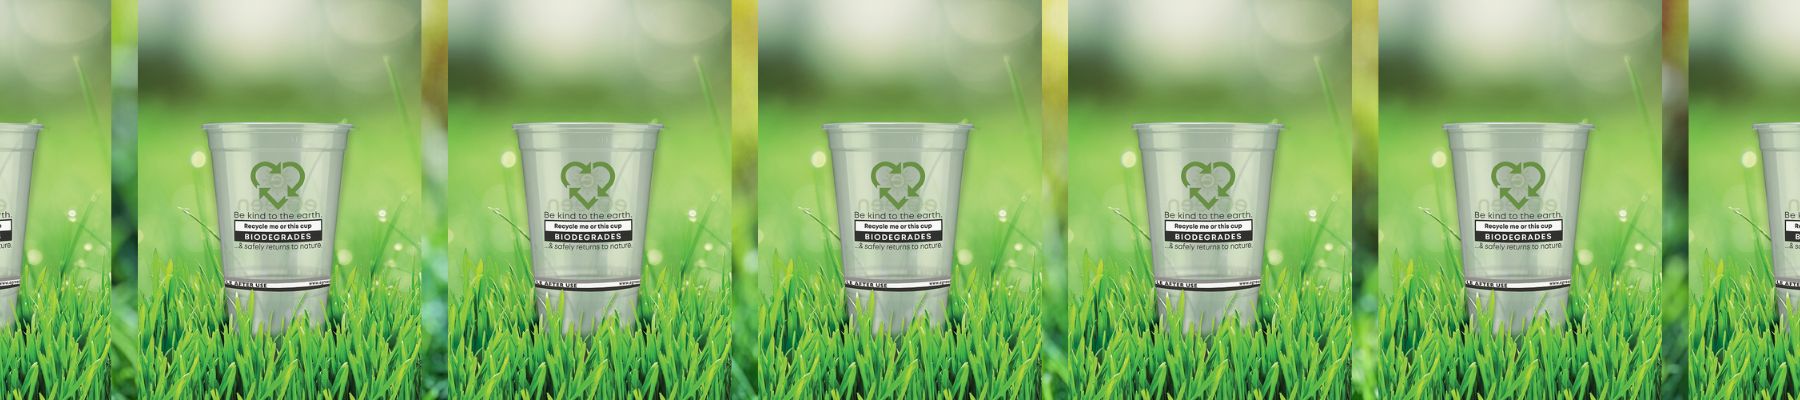 Biodegradable Cups - Glassjacks IV